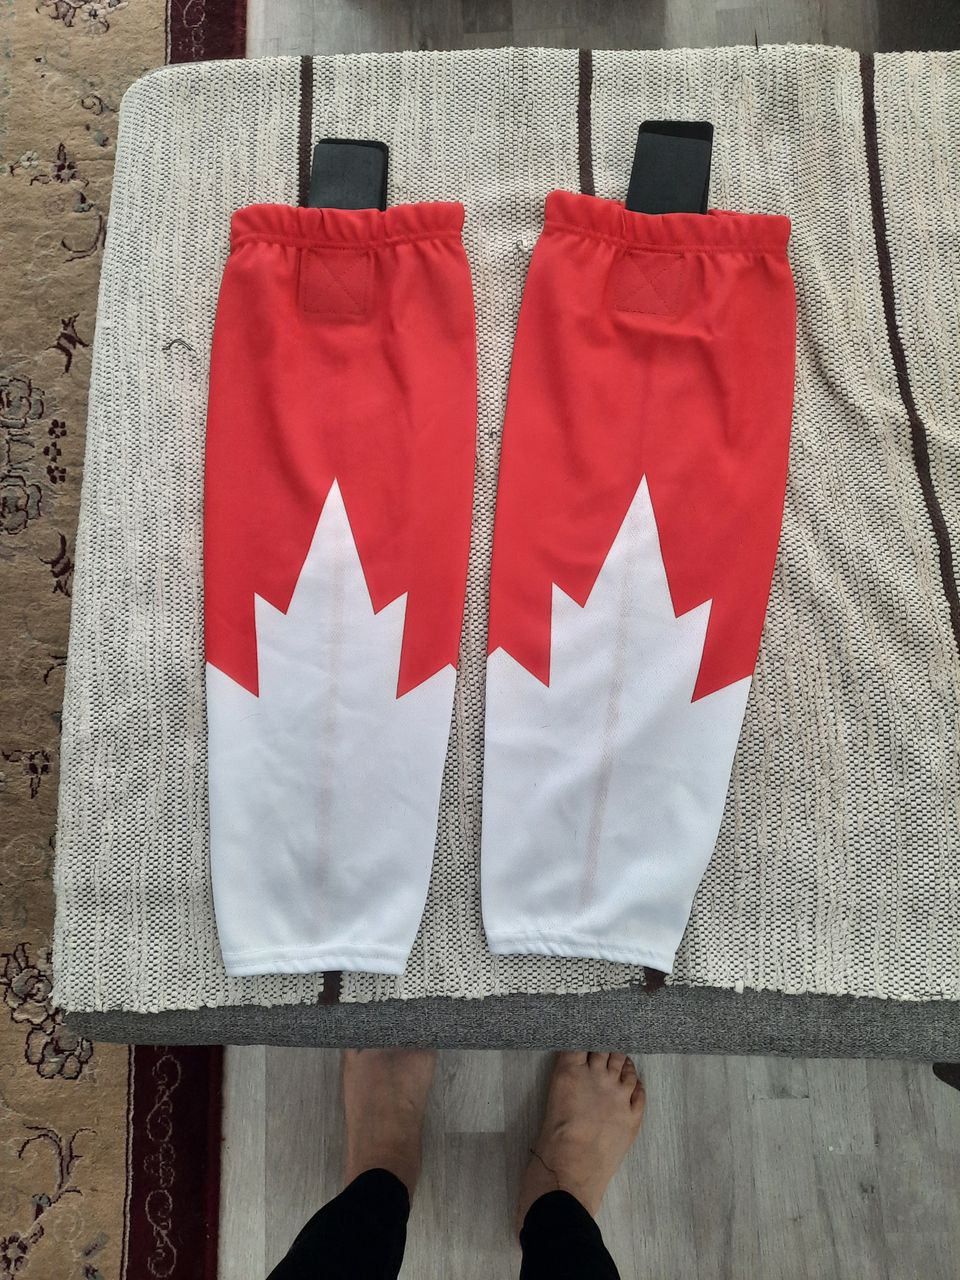 Team Canada Socks